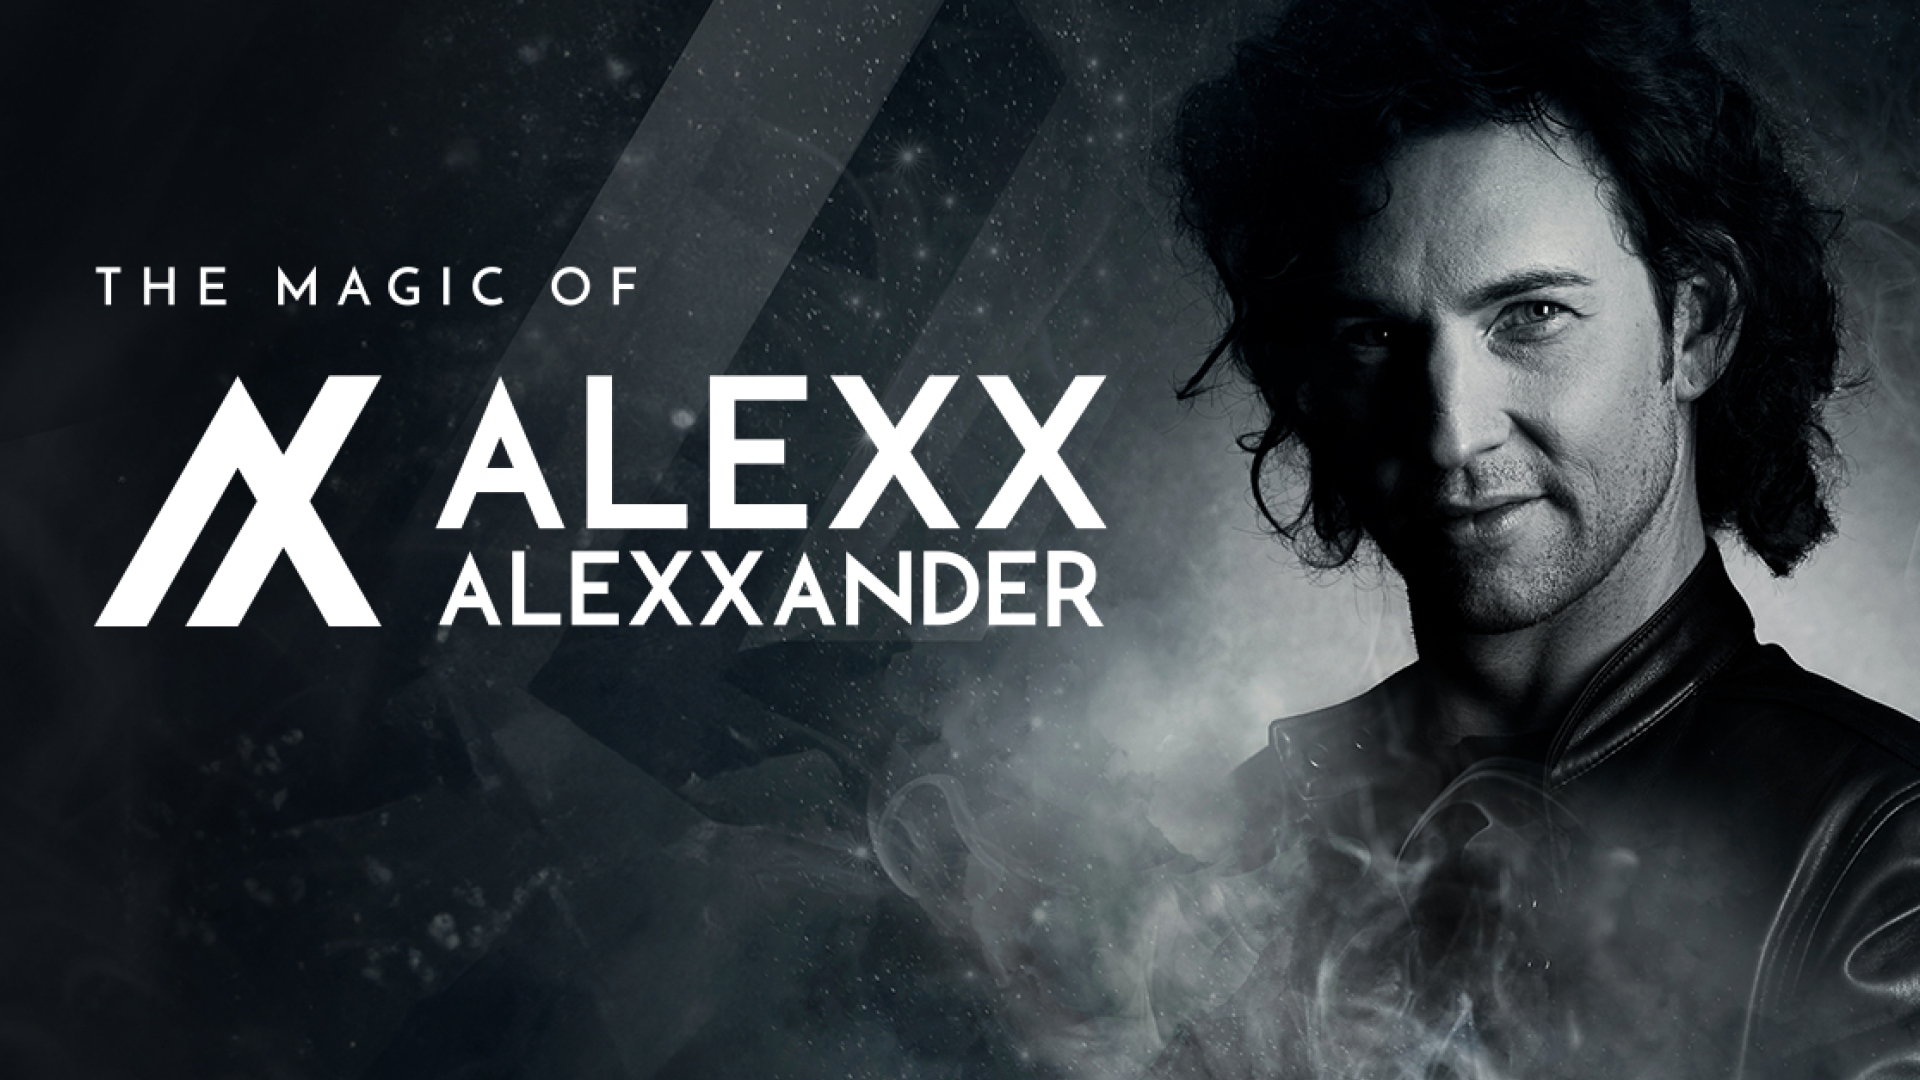 The magic of Alexx Alexxander 2.0